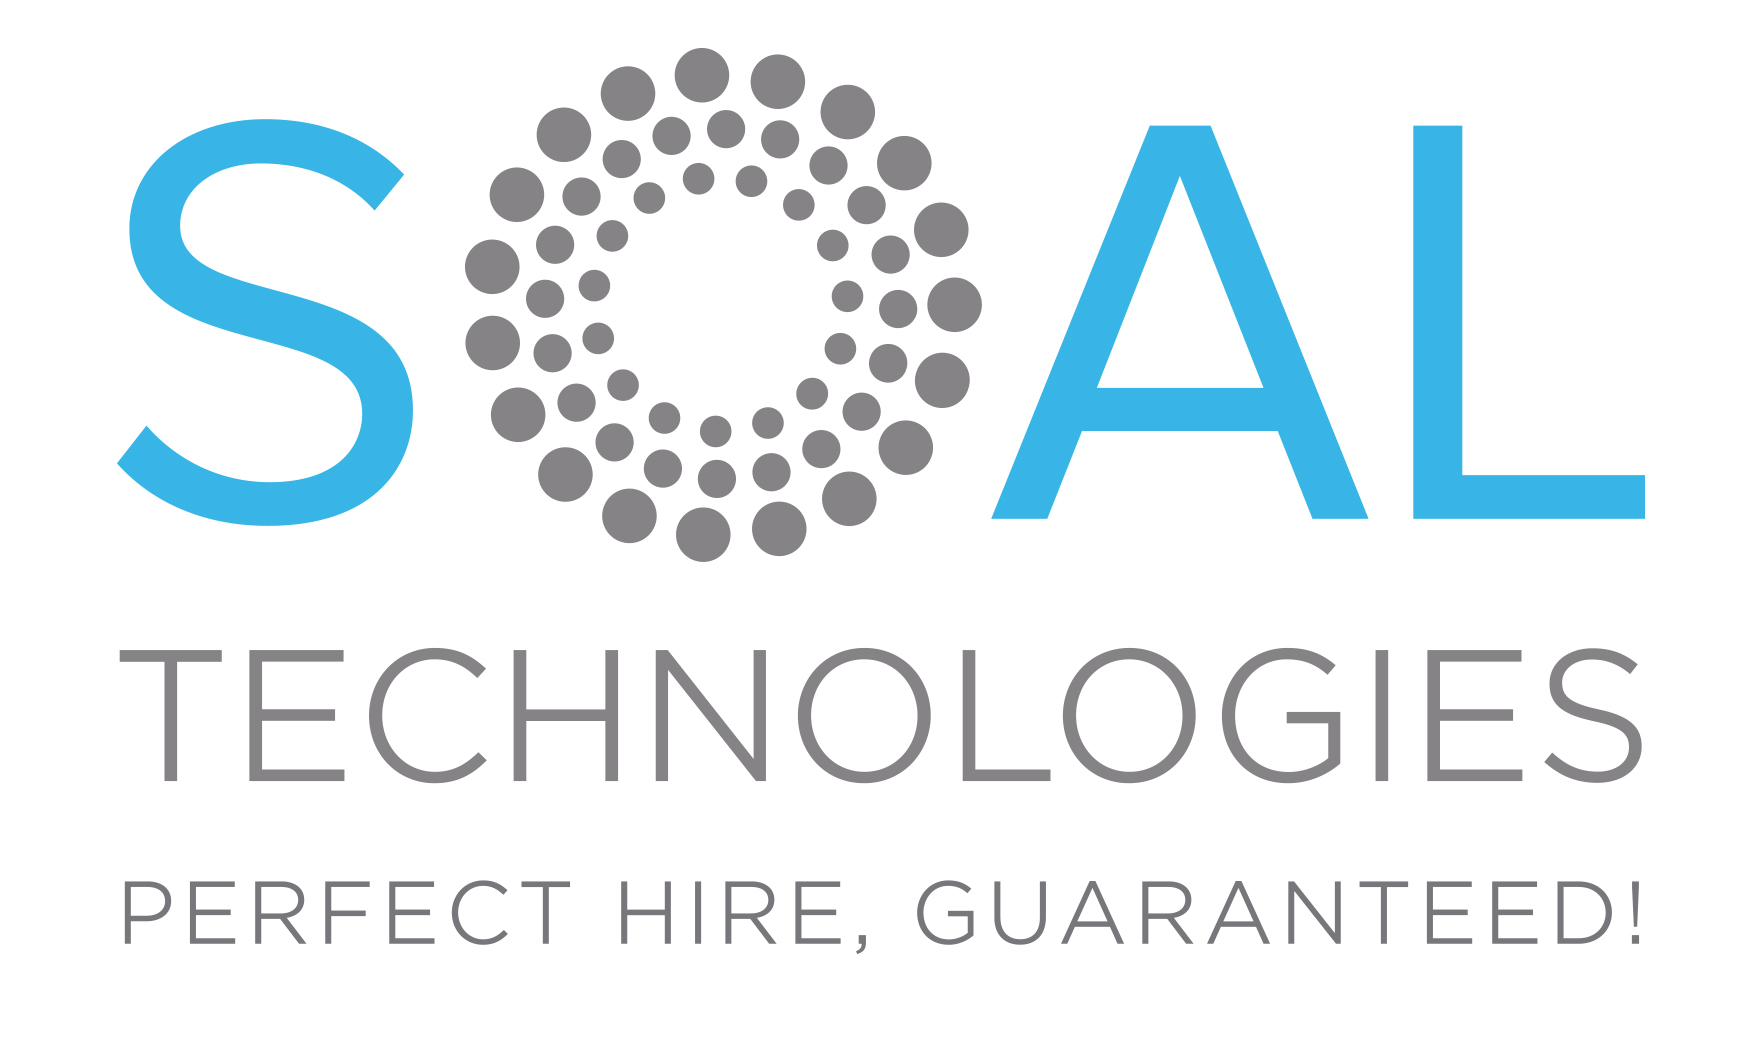 SOAL Technologies Company Logo